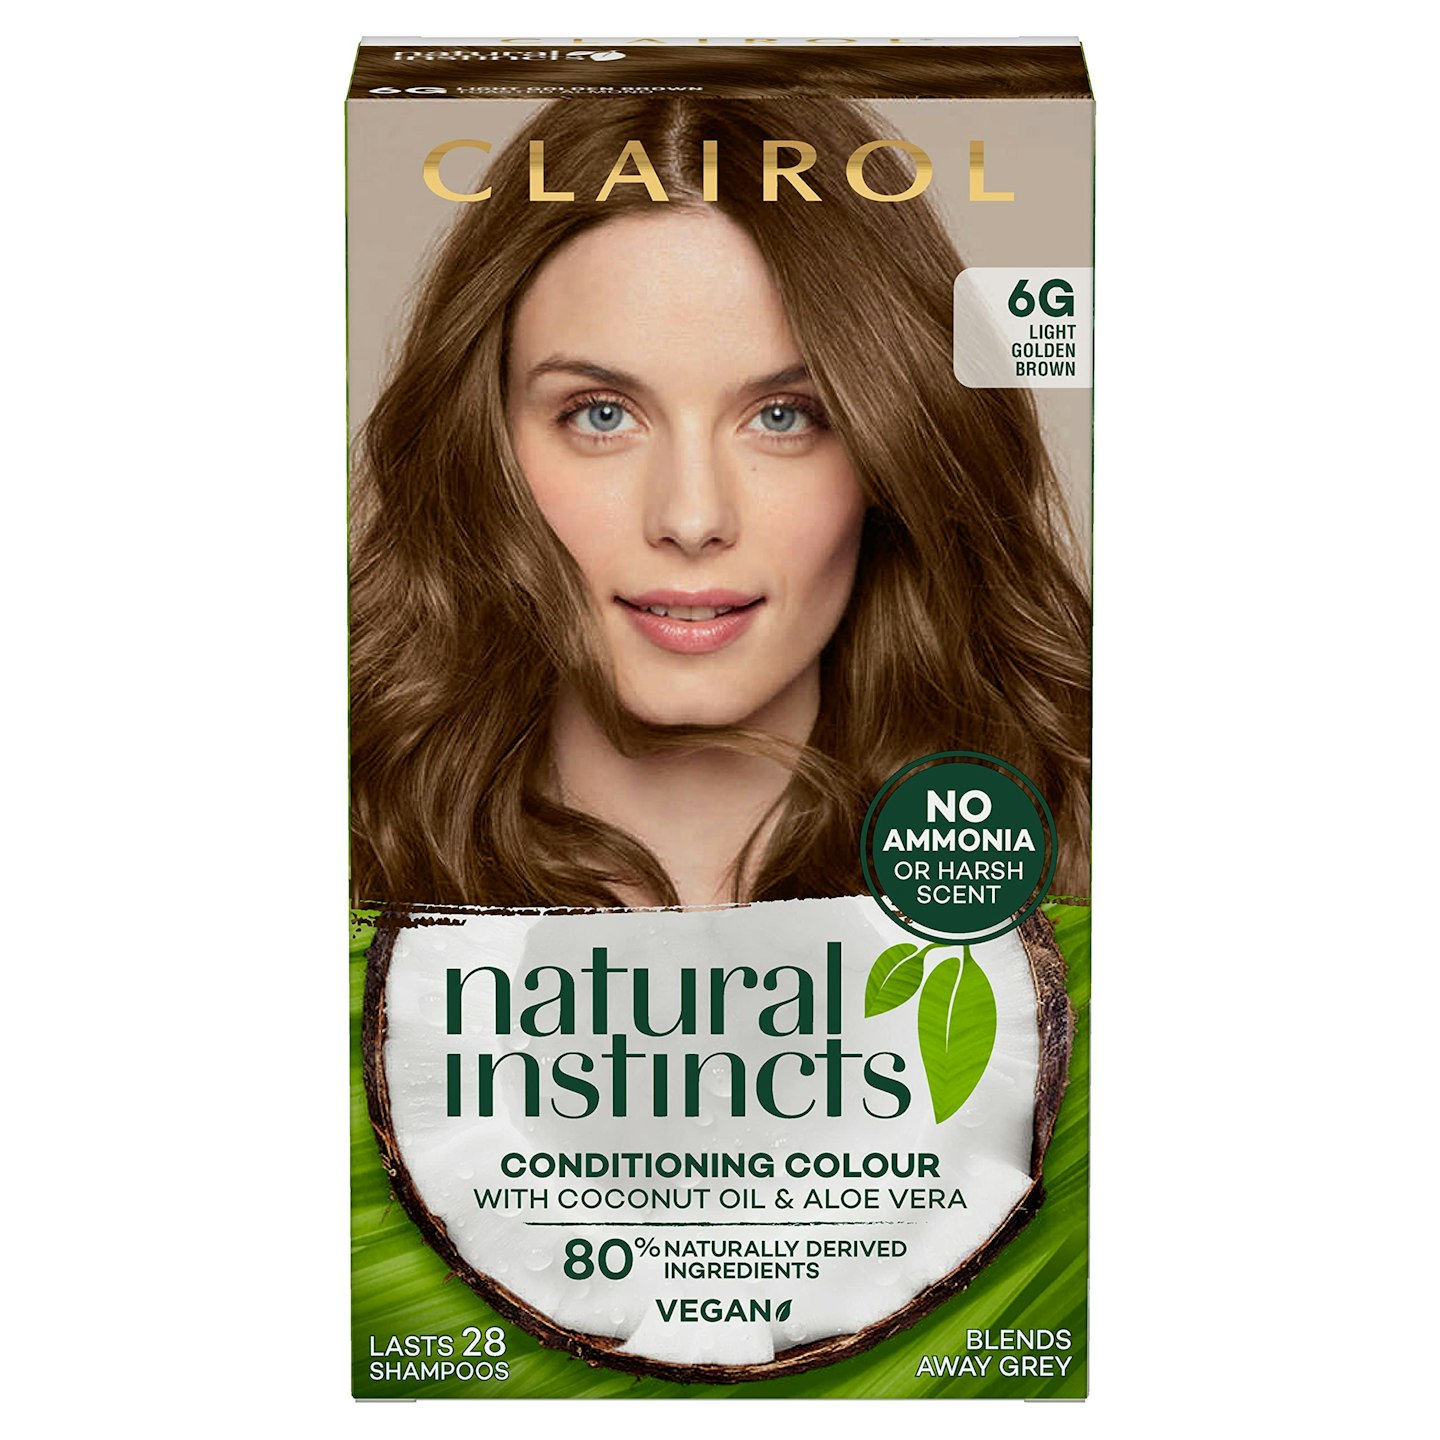 Clairol Natural Instincts Semi-Permanent No Ammonia Vegan Hair Dye